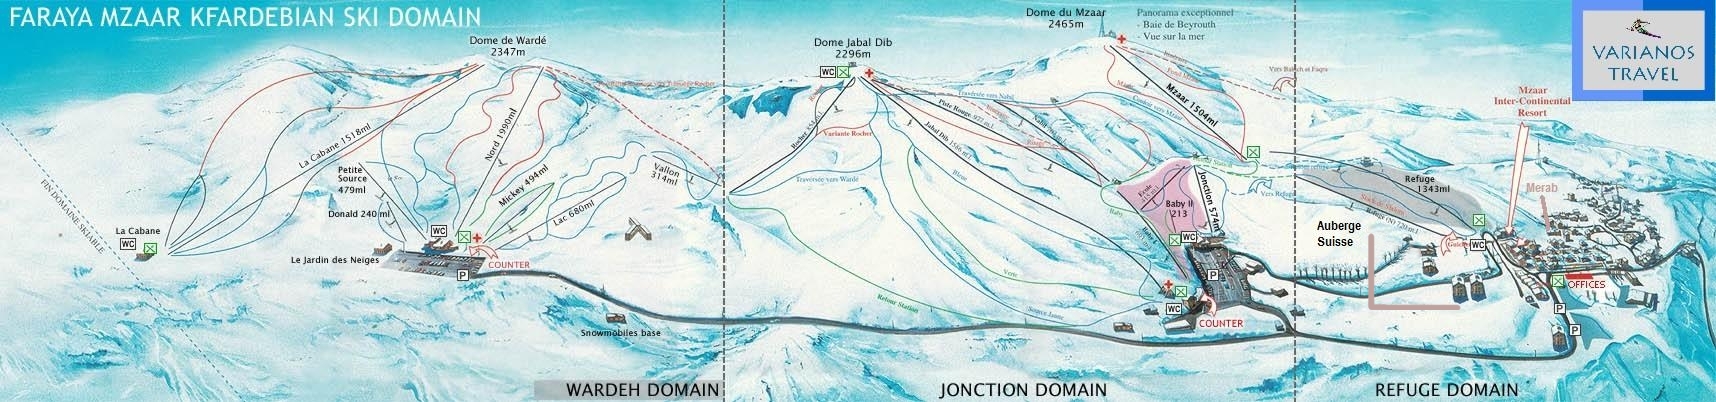 Map of Faraya Mzaar ski resort in Lebanon